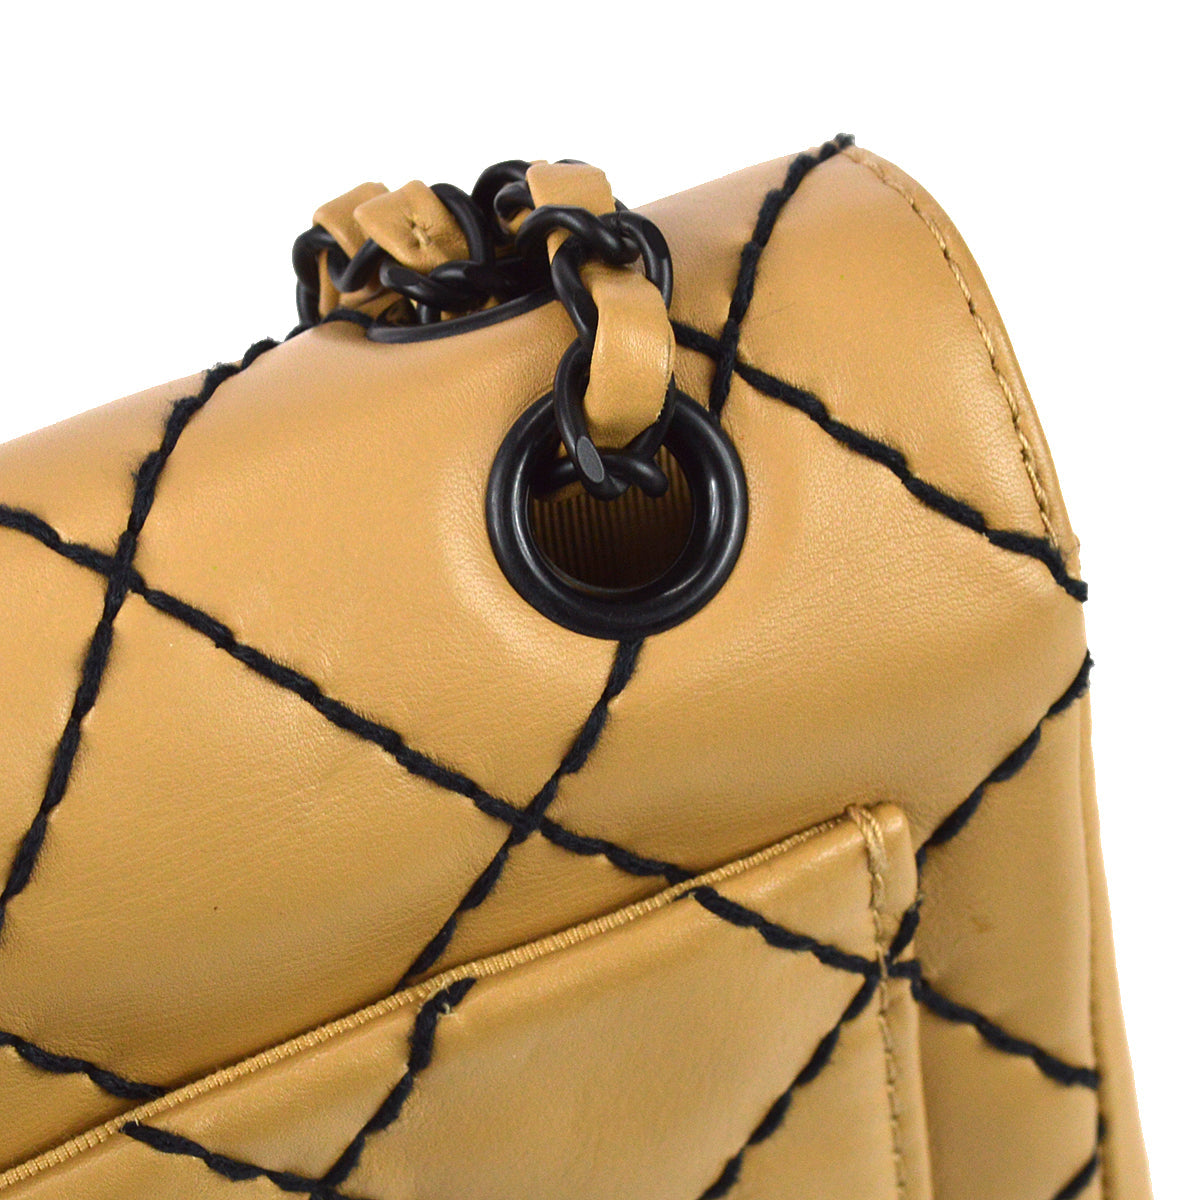 Chanel Black Calfskin Wild Stitch Straight Flap Bag